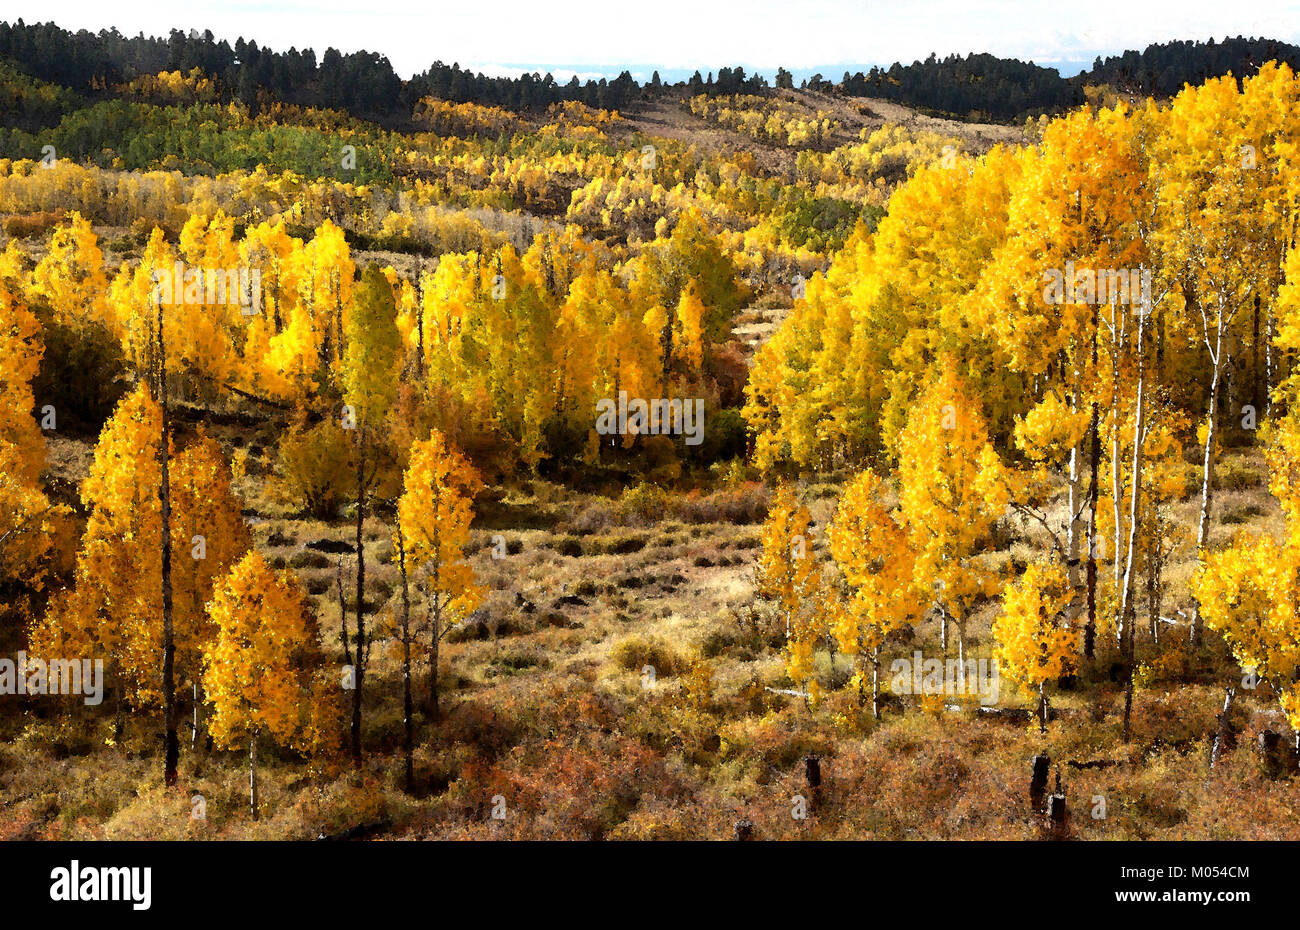 BOULDER, MT, UT - 2016-09-30 Herbst Farbe-15a (31659754985) Stockfoto